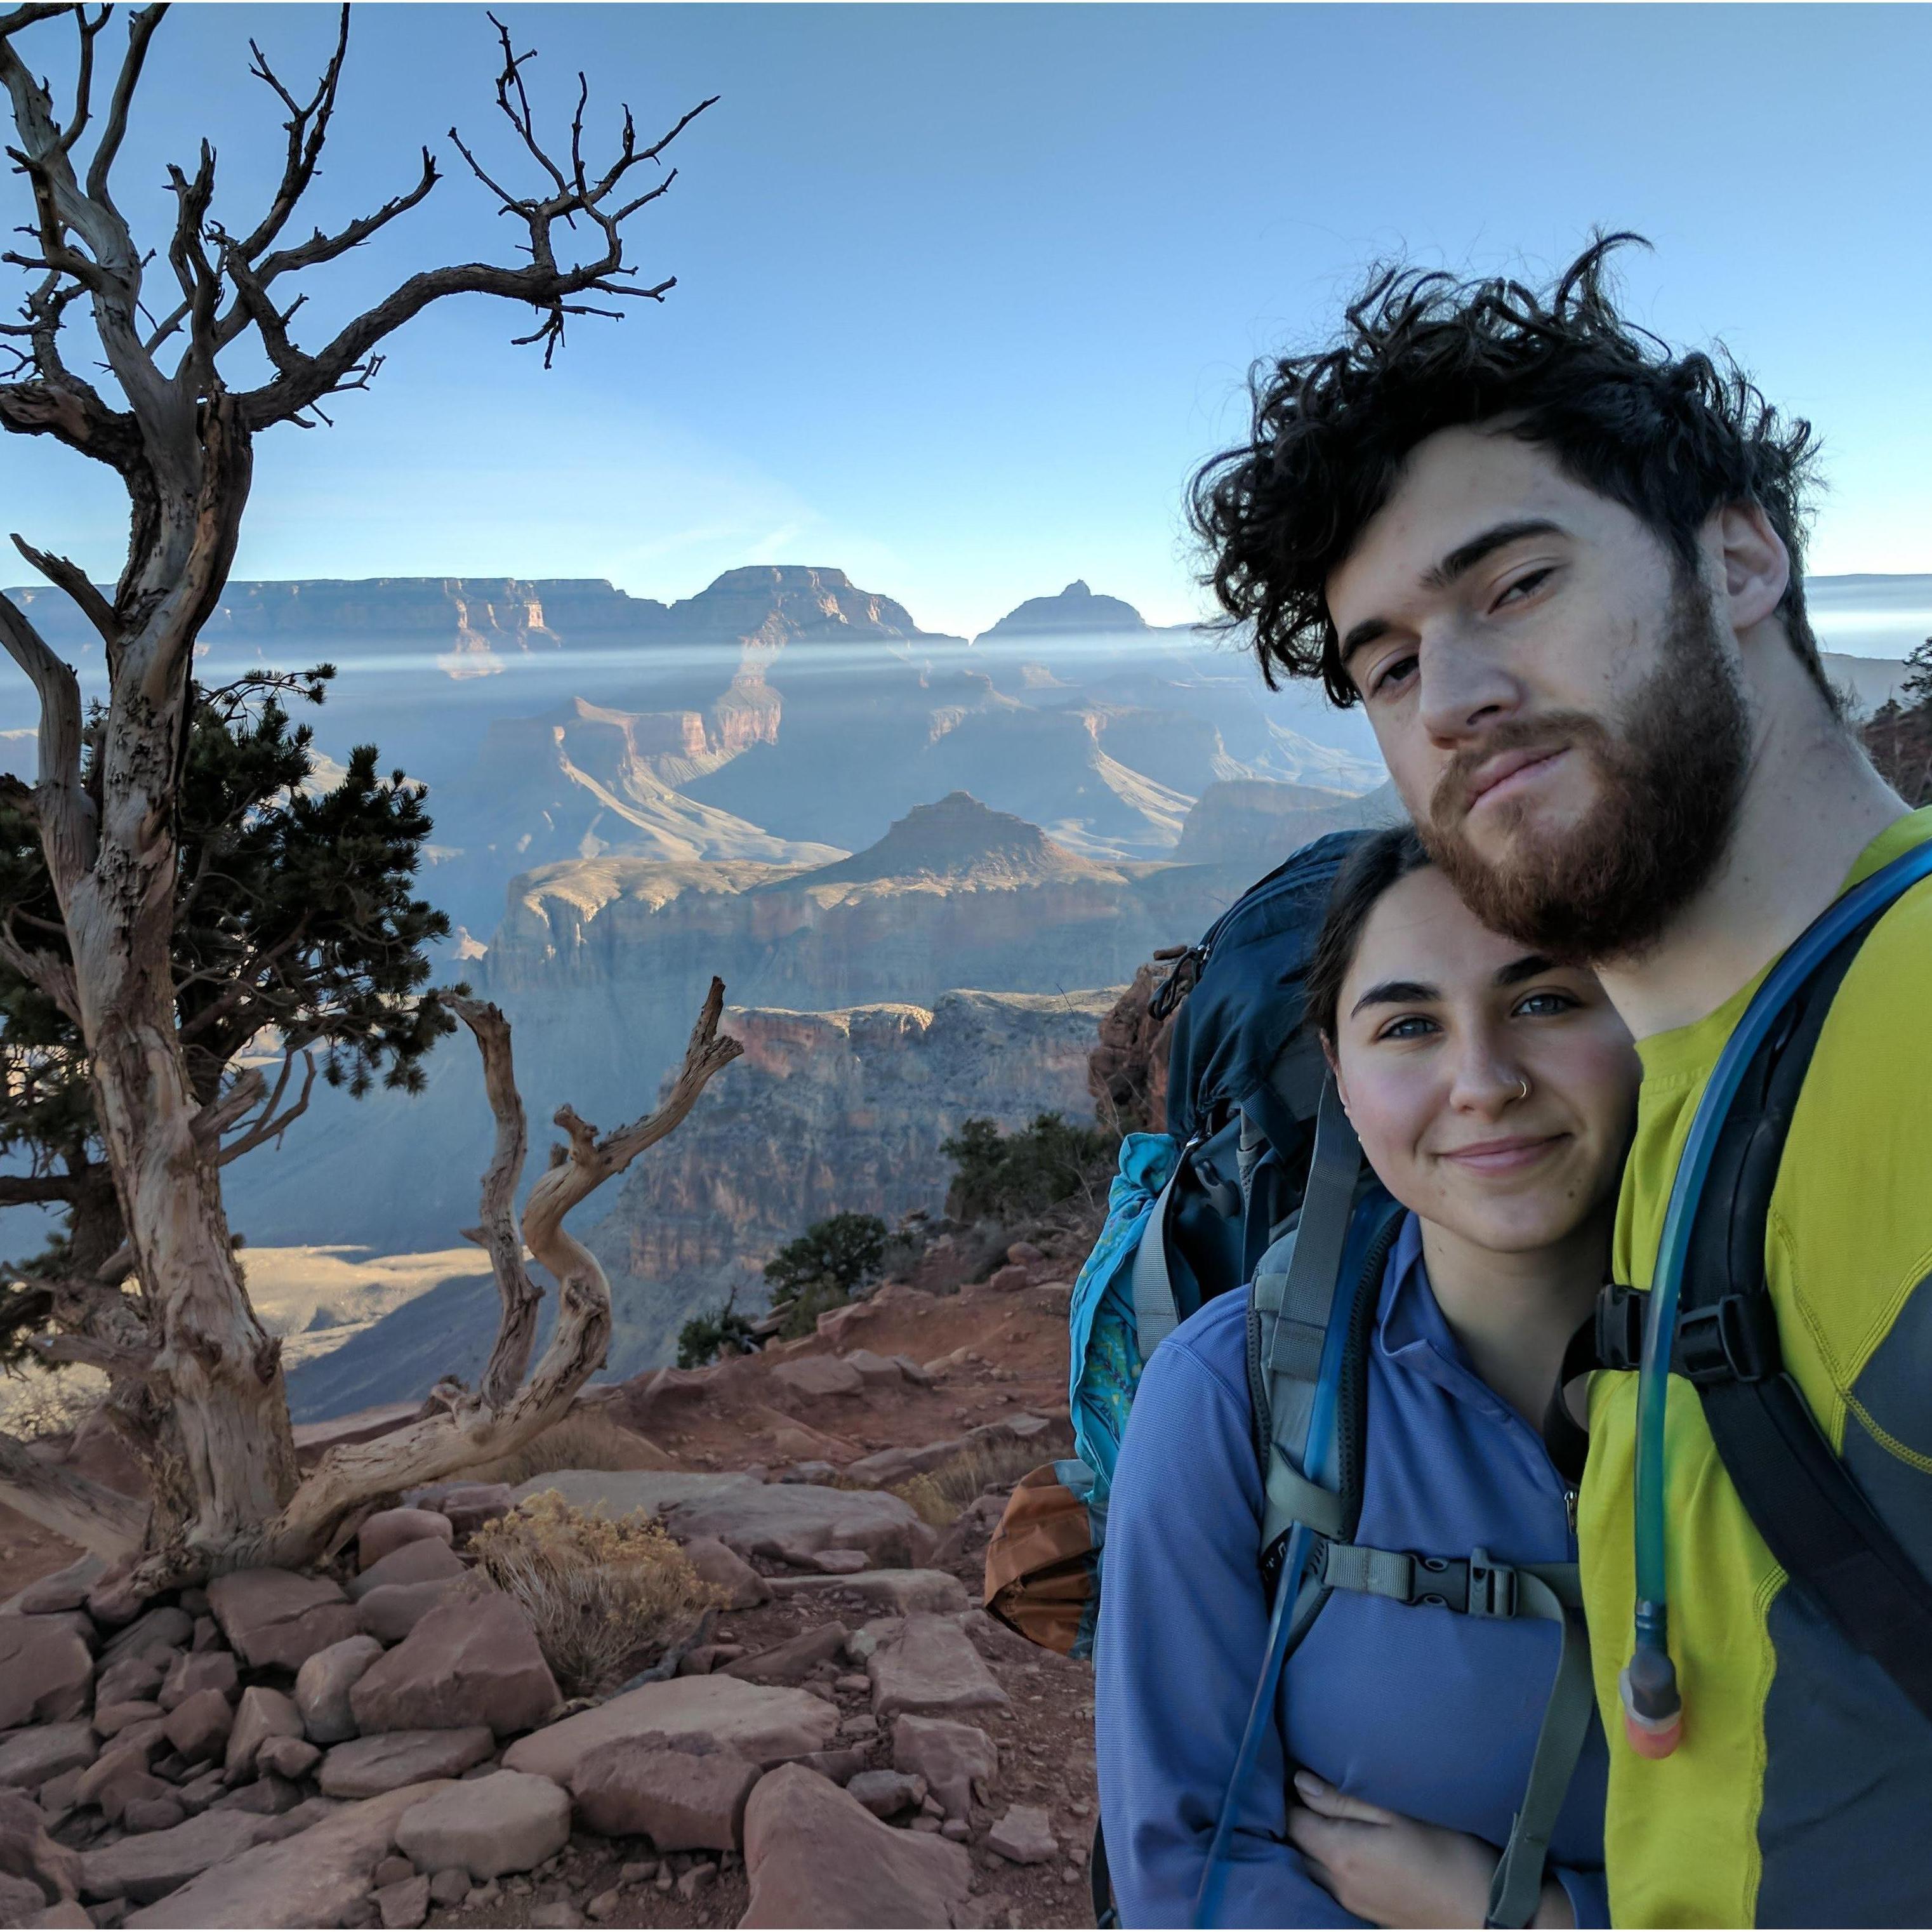 Descending down the Grand Canyon, Dec 2017